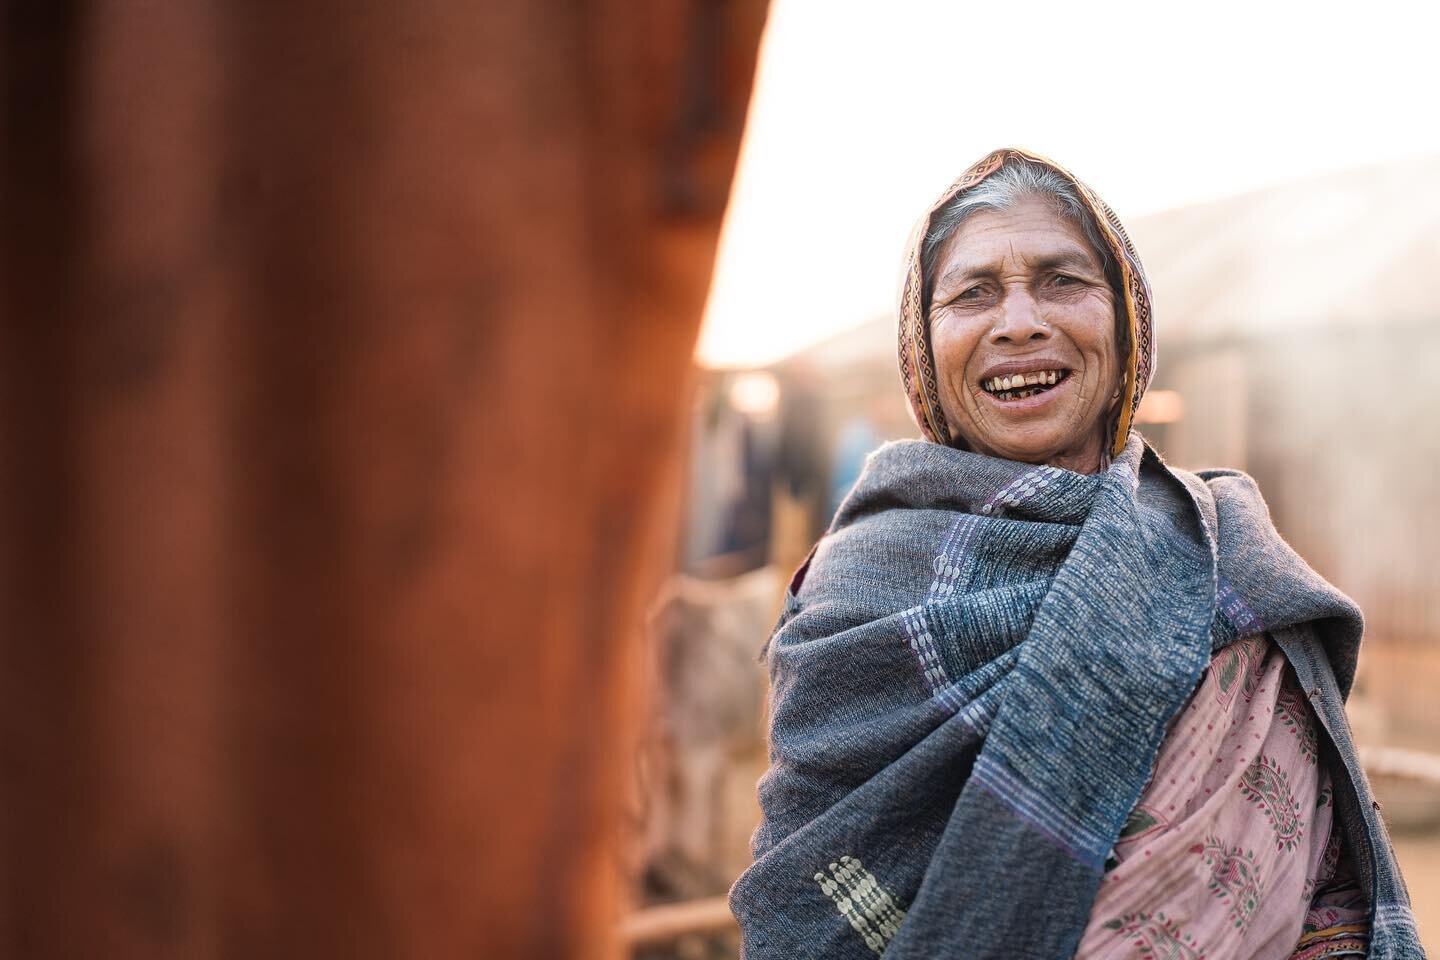 Grandma from Gaibandha 🇧🇩 

Photo by @nihab_rahman

#nihabrahman
#bandarban
#bangladeshstories
#humansofbangladesh
__________________
#chittagong #chittagonghilltracks #humanitarianaid  #humaninterest
#unhcr_bgd #unicefbangladesh  #coxsbazar #aidwo